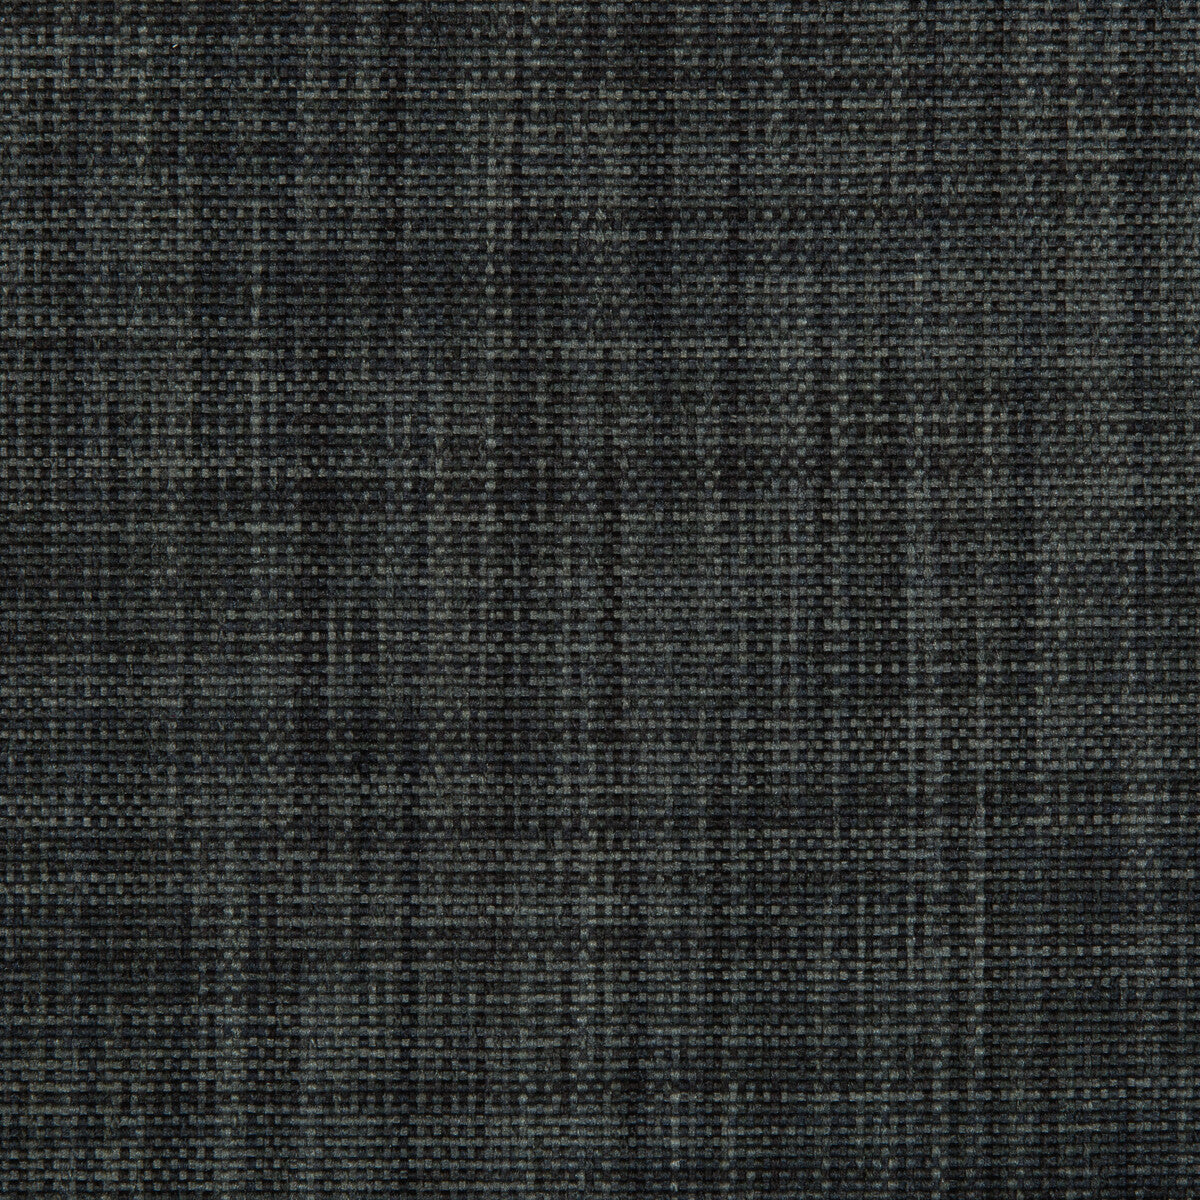 Kravet Smart fabric in 30664-5 color - pattern 30664.5.0 - by Kravet Smart